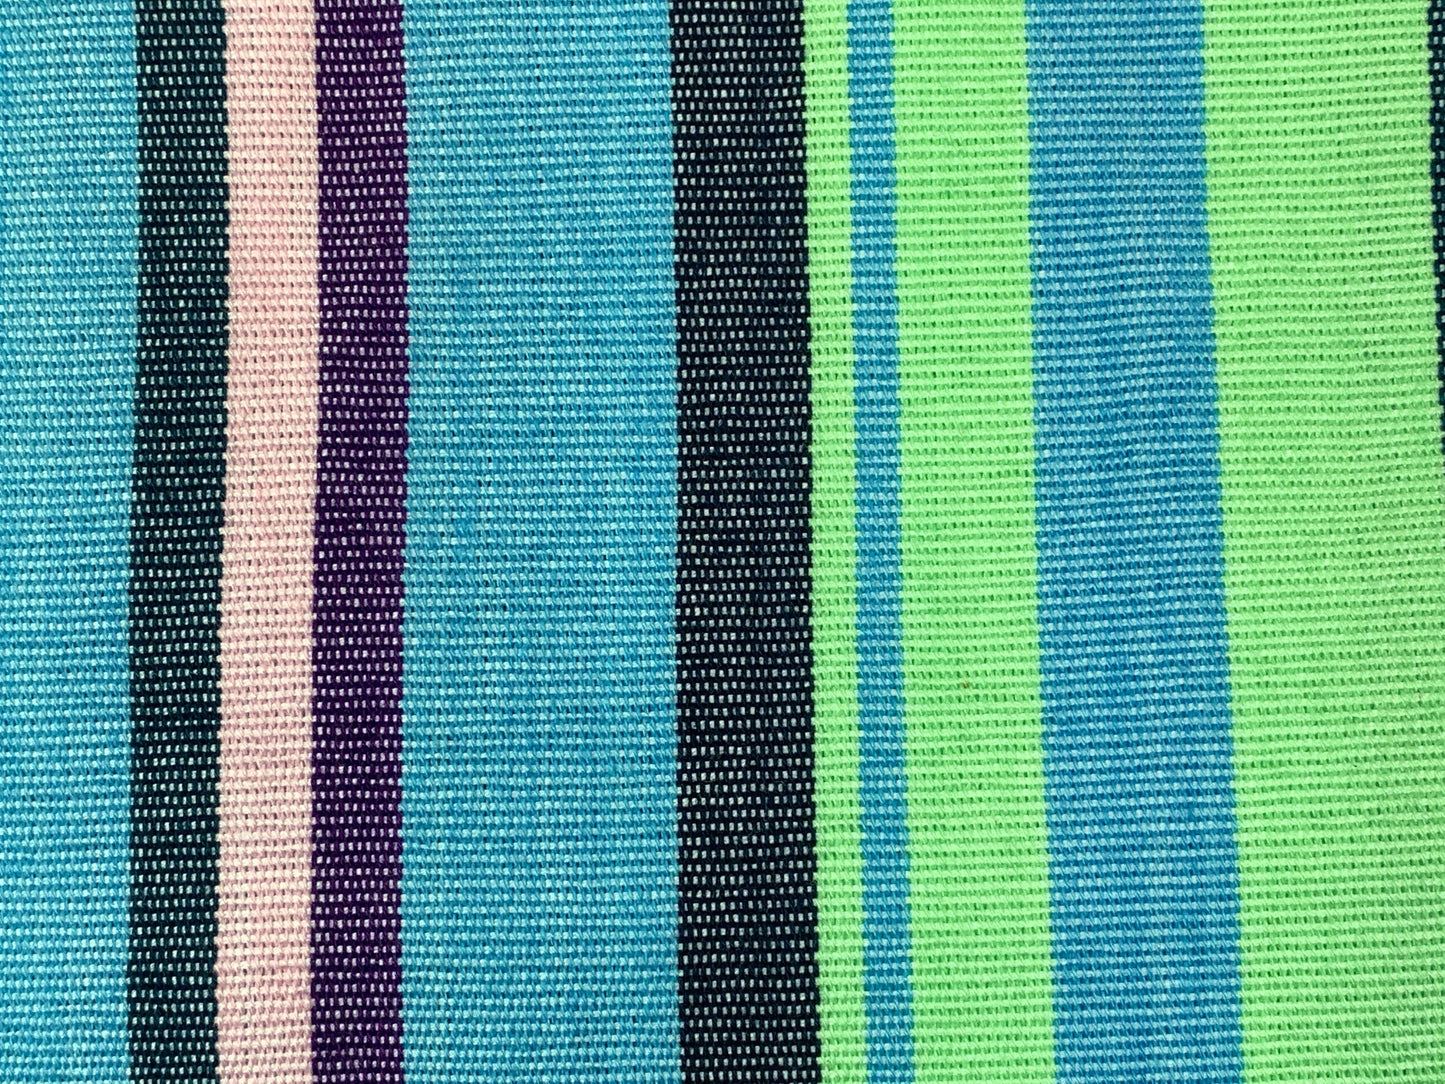 Guatemalan Handwoven Green, Pink, Blue, Purple Stripes